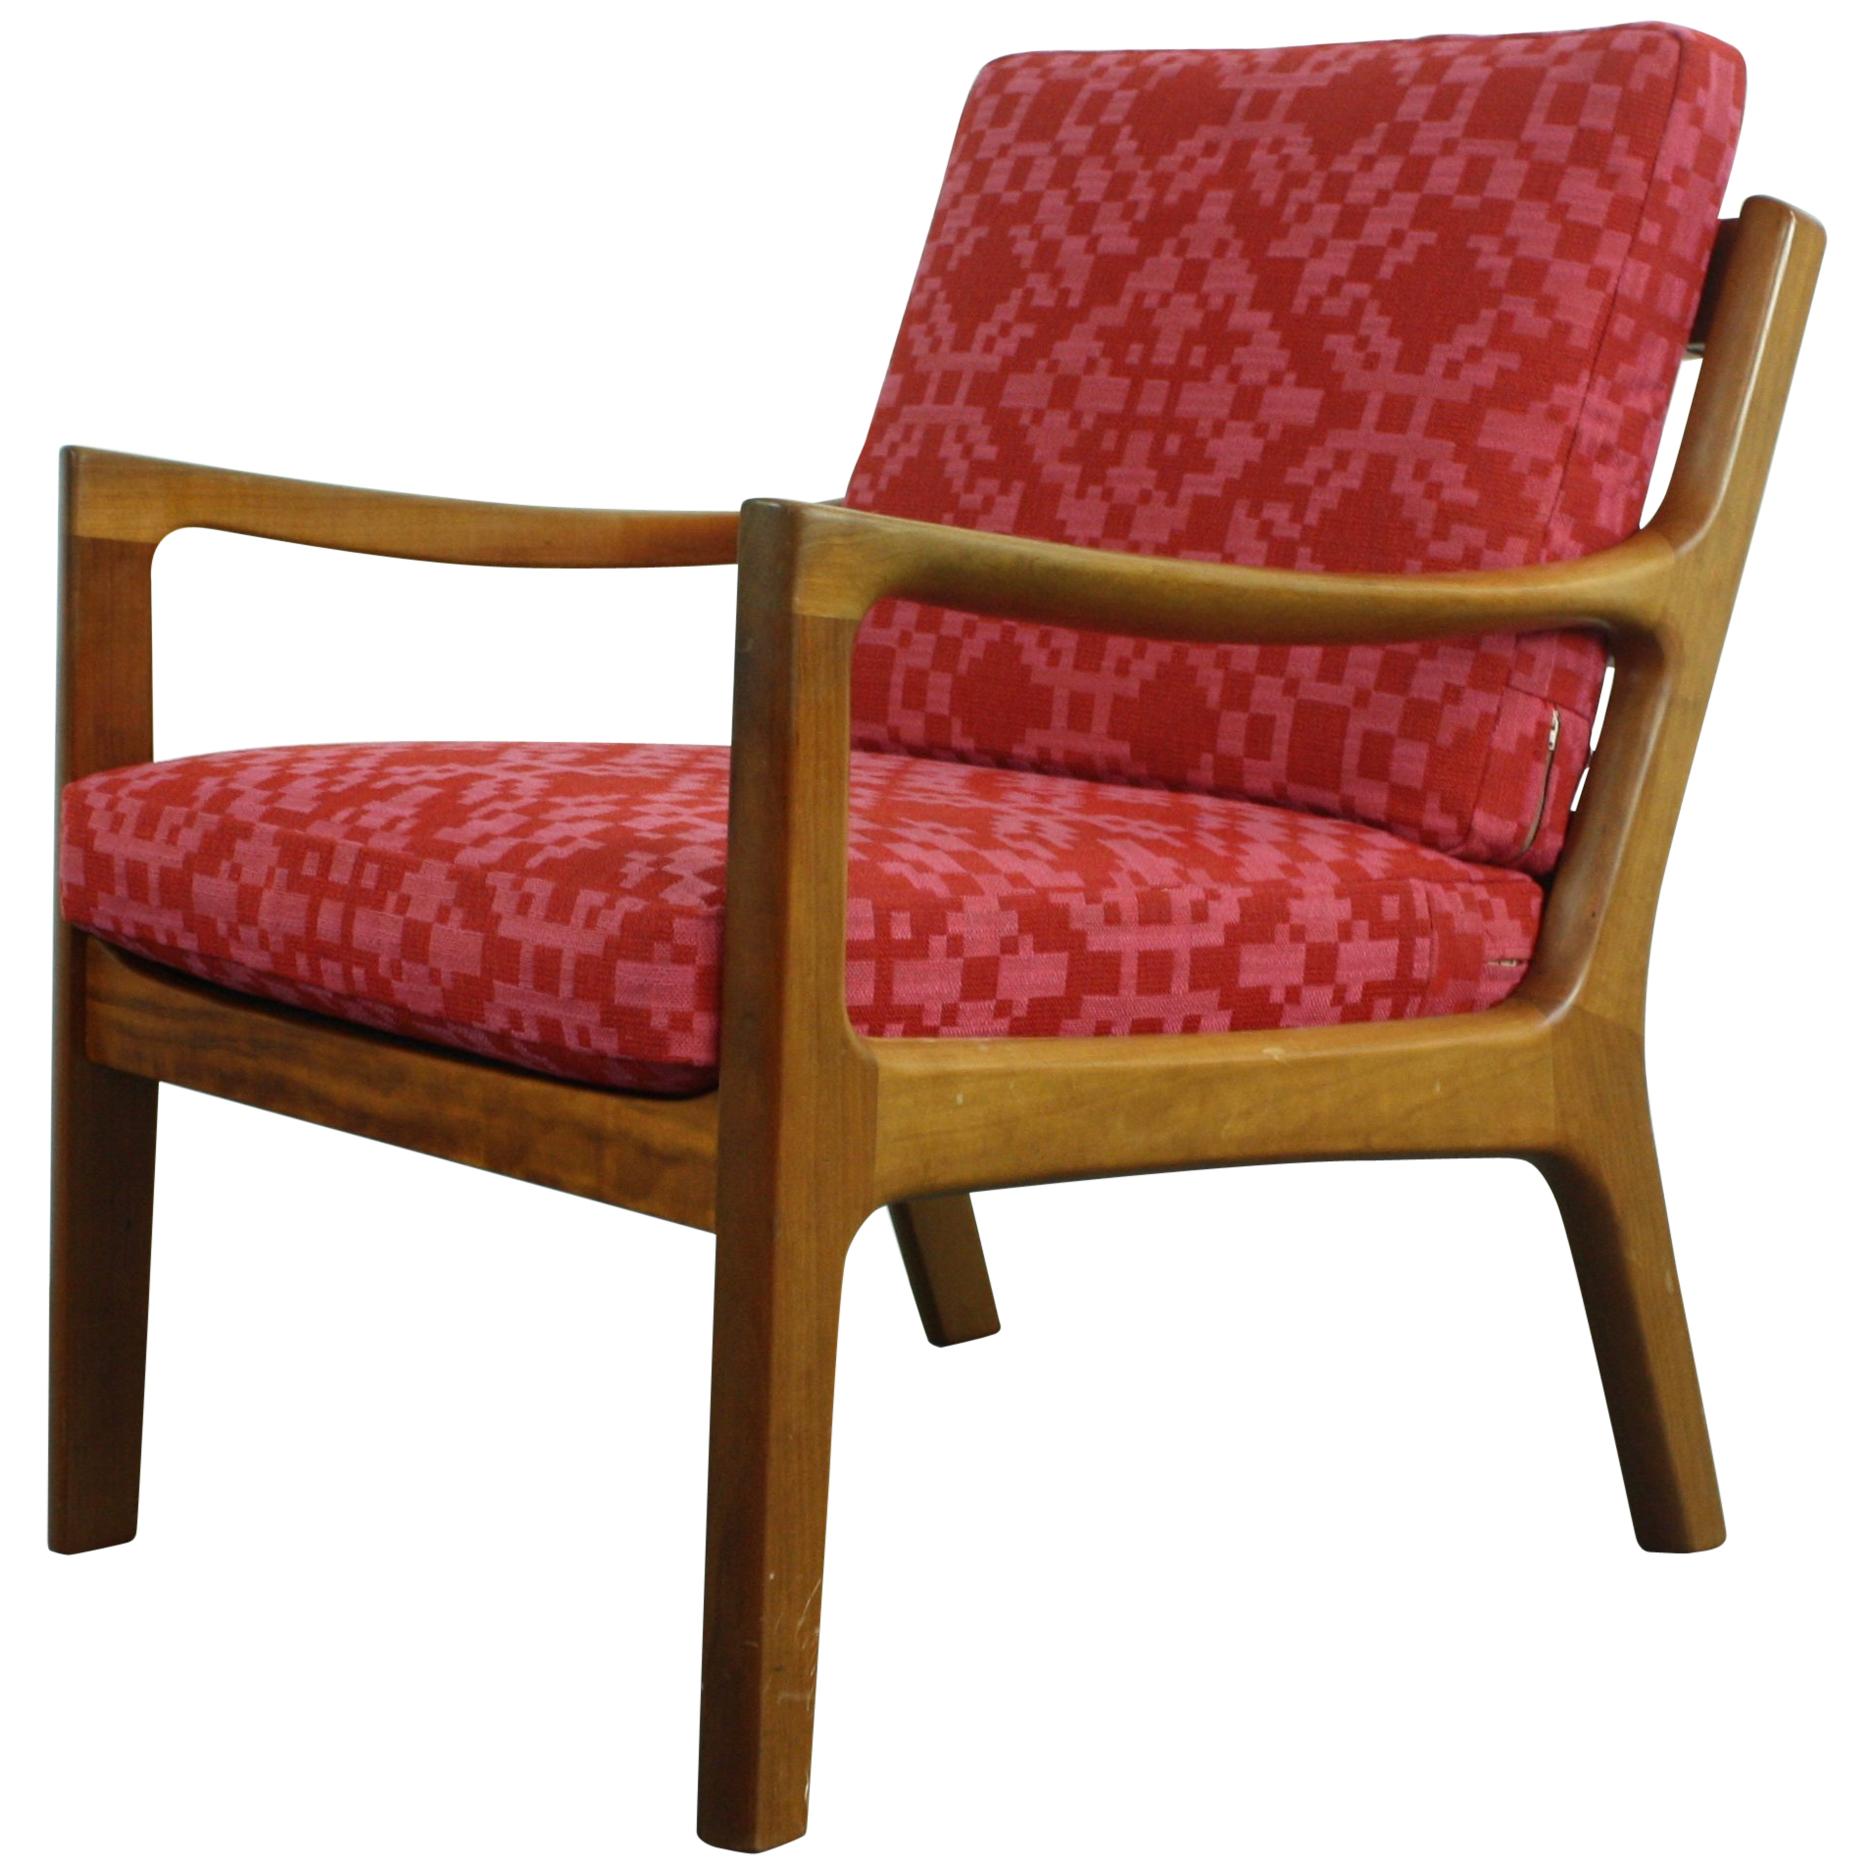 Ole Wanscher for France & Son, Denmark, 1960s Teak Lounge Chair Geo Upholstery